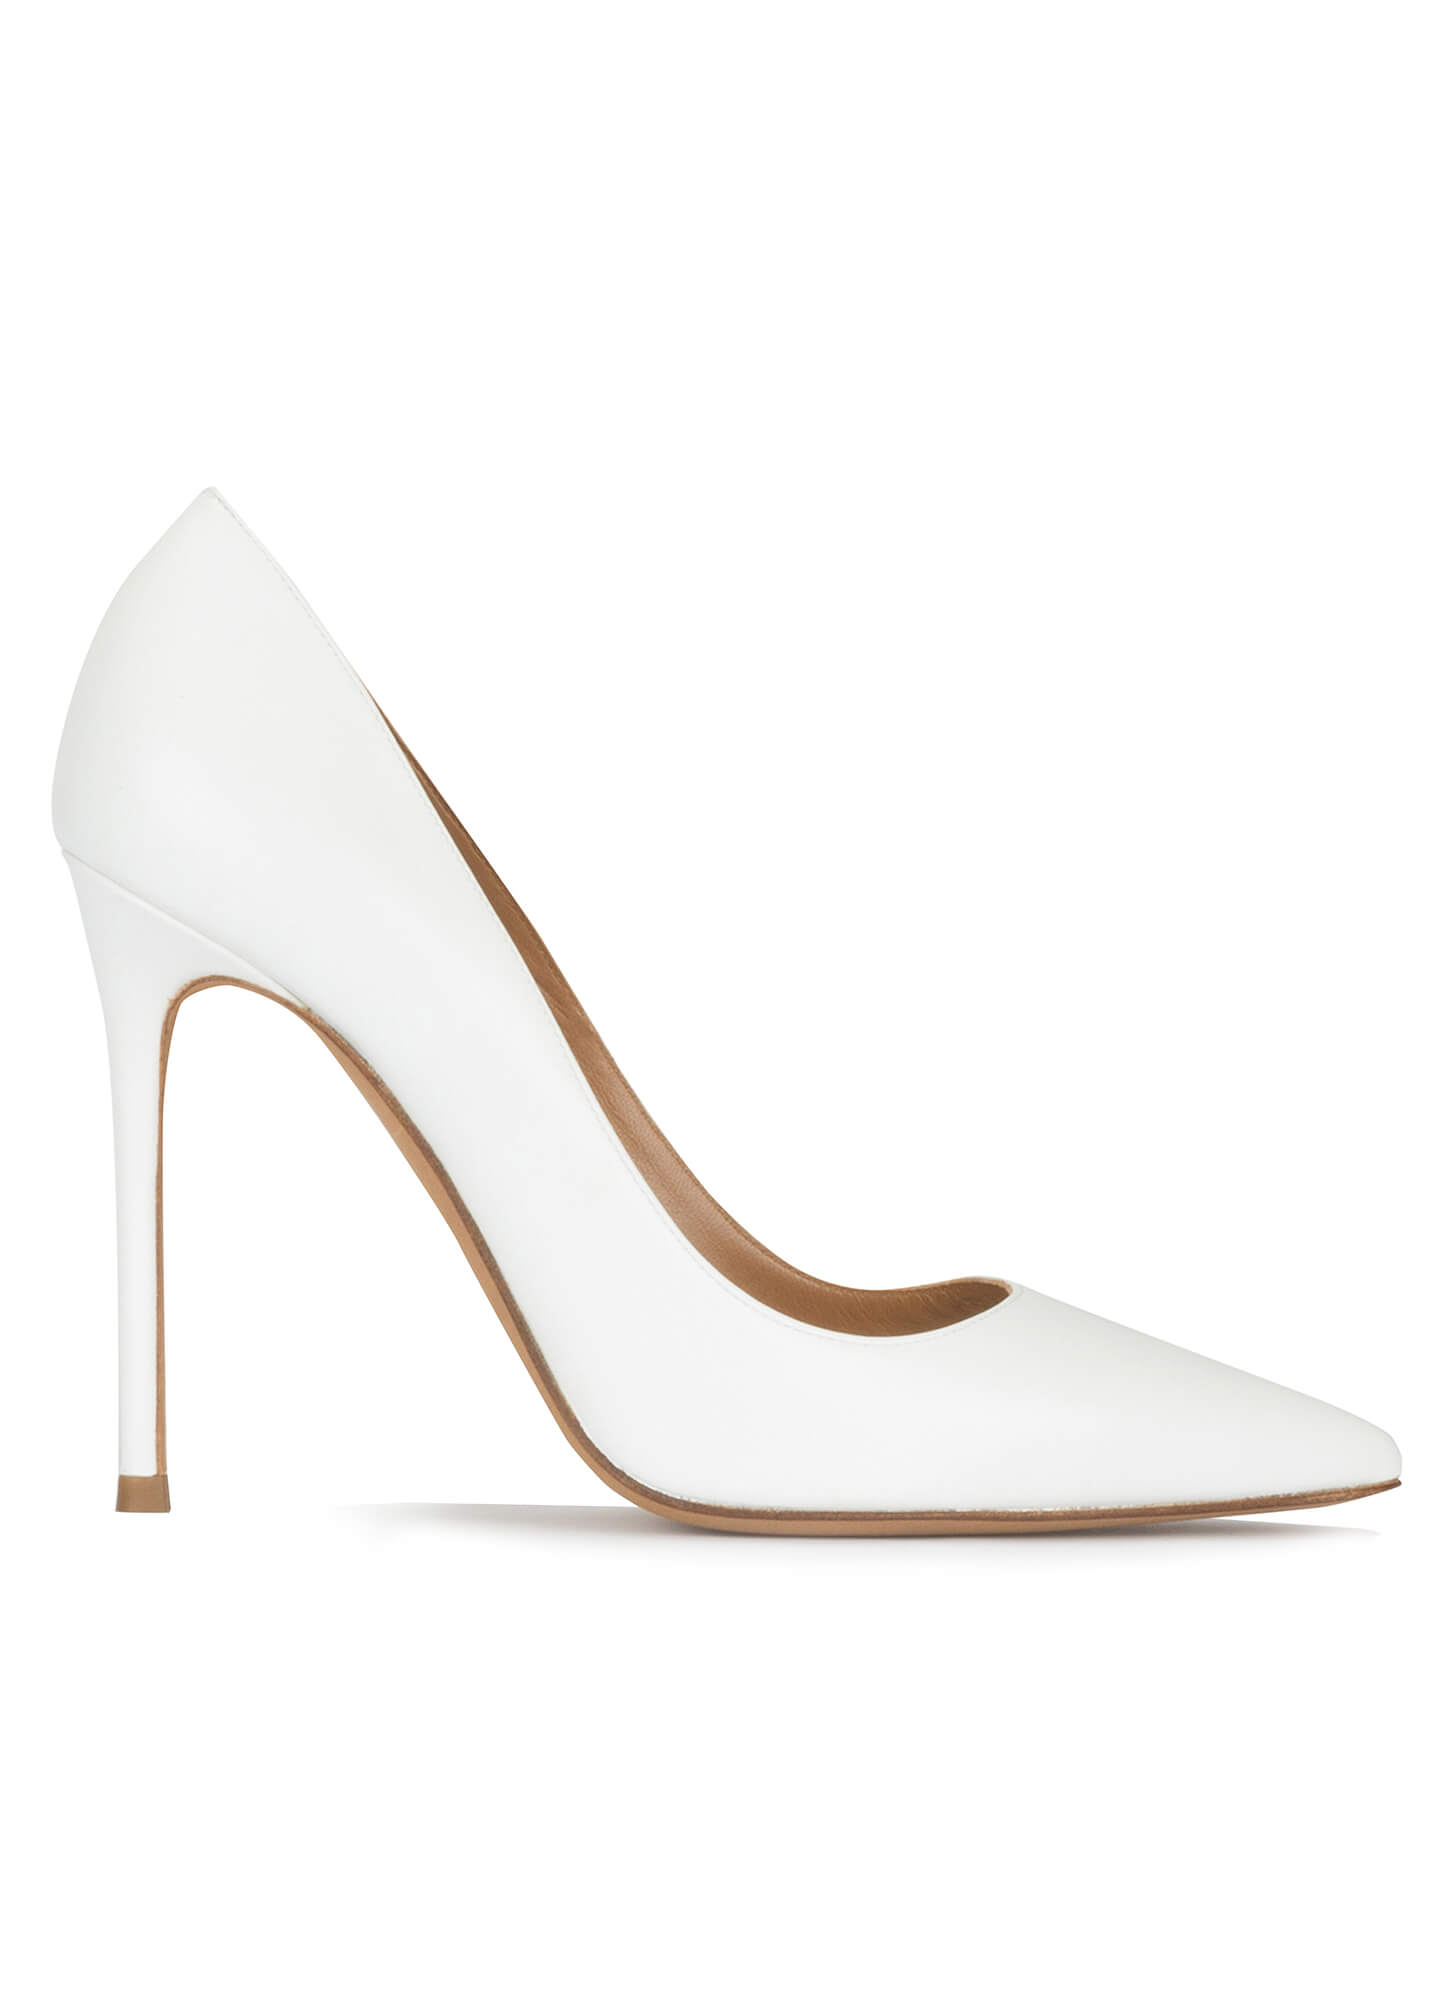 Details 149+ white high heel pumps best - esthdonghoadian